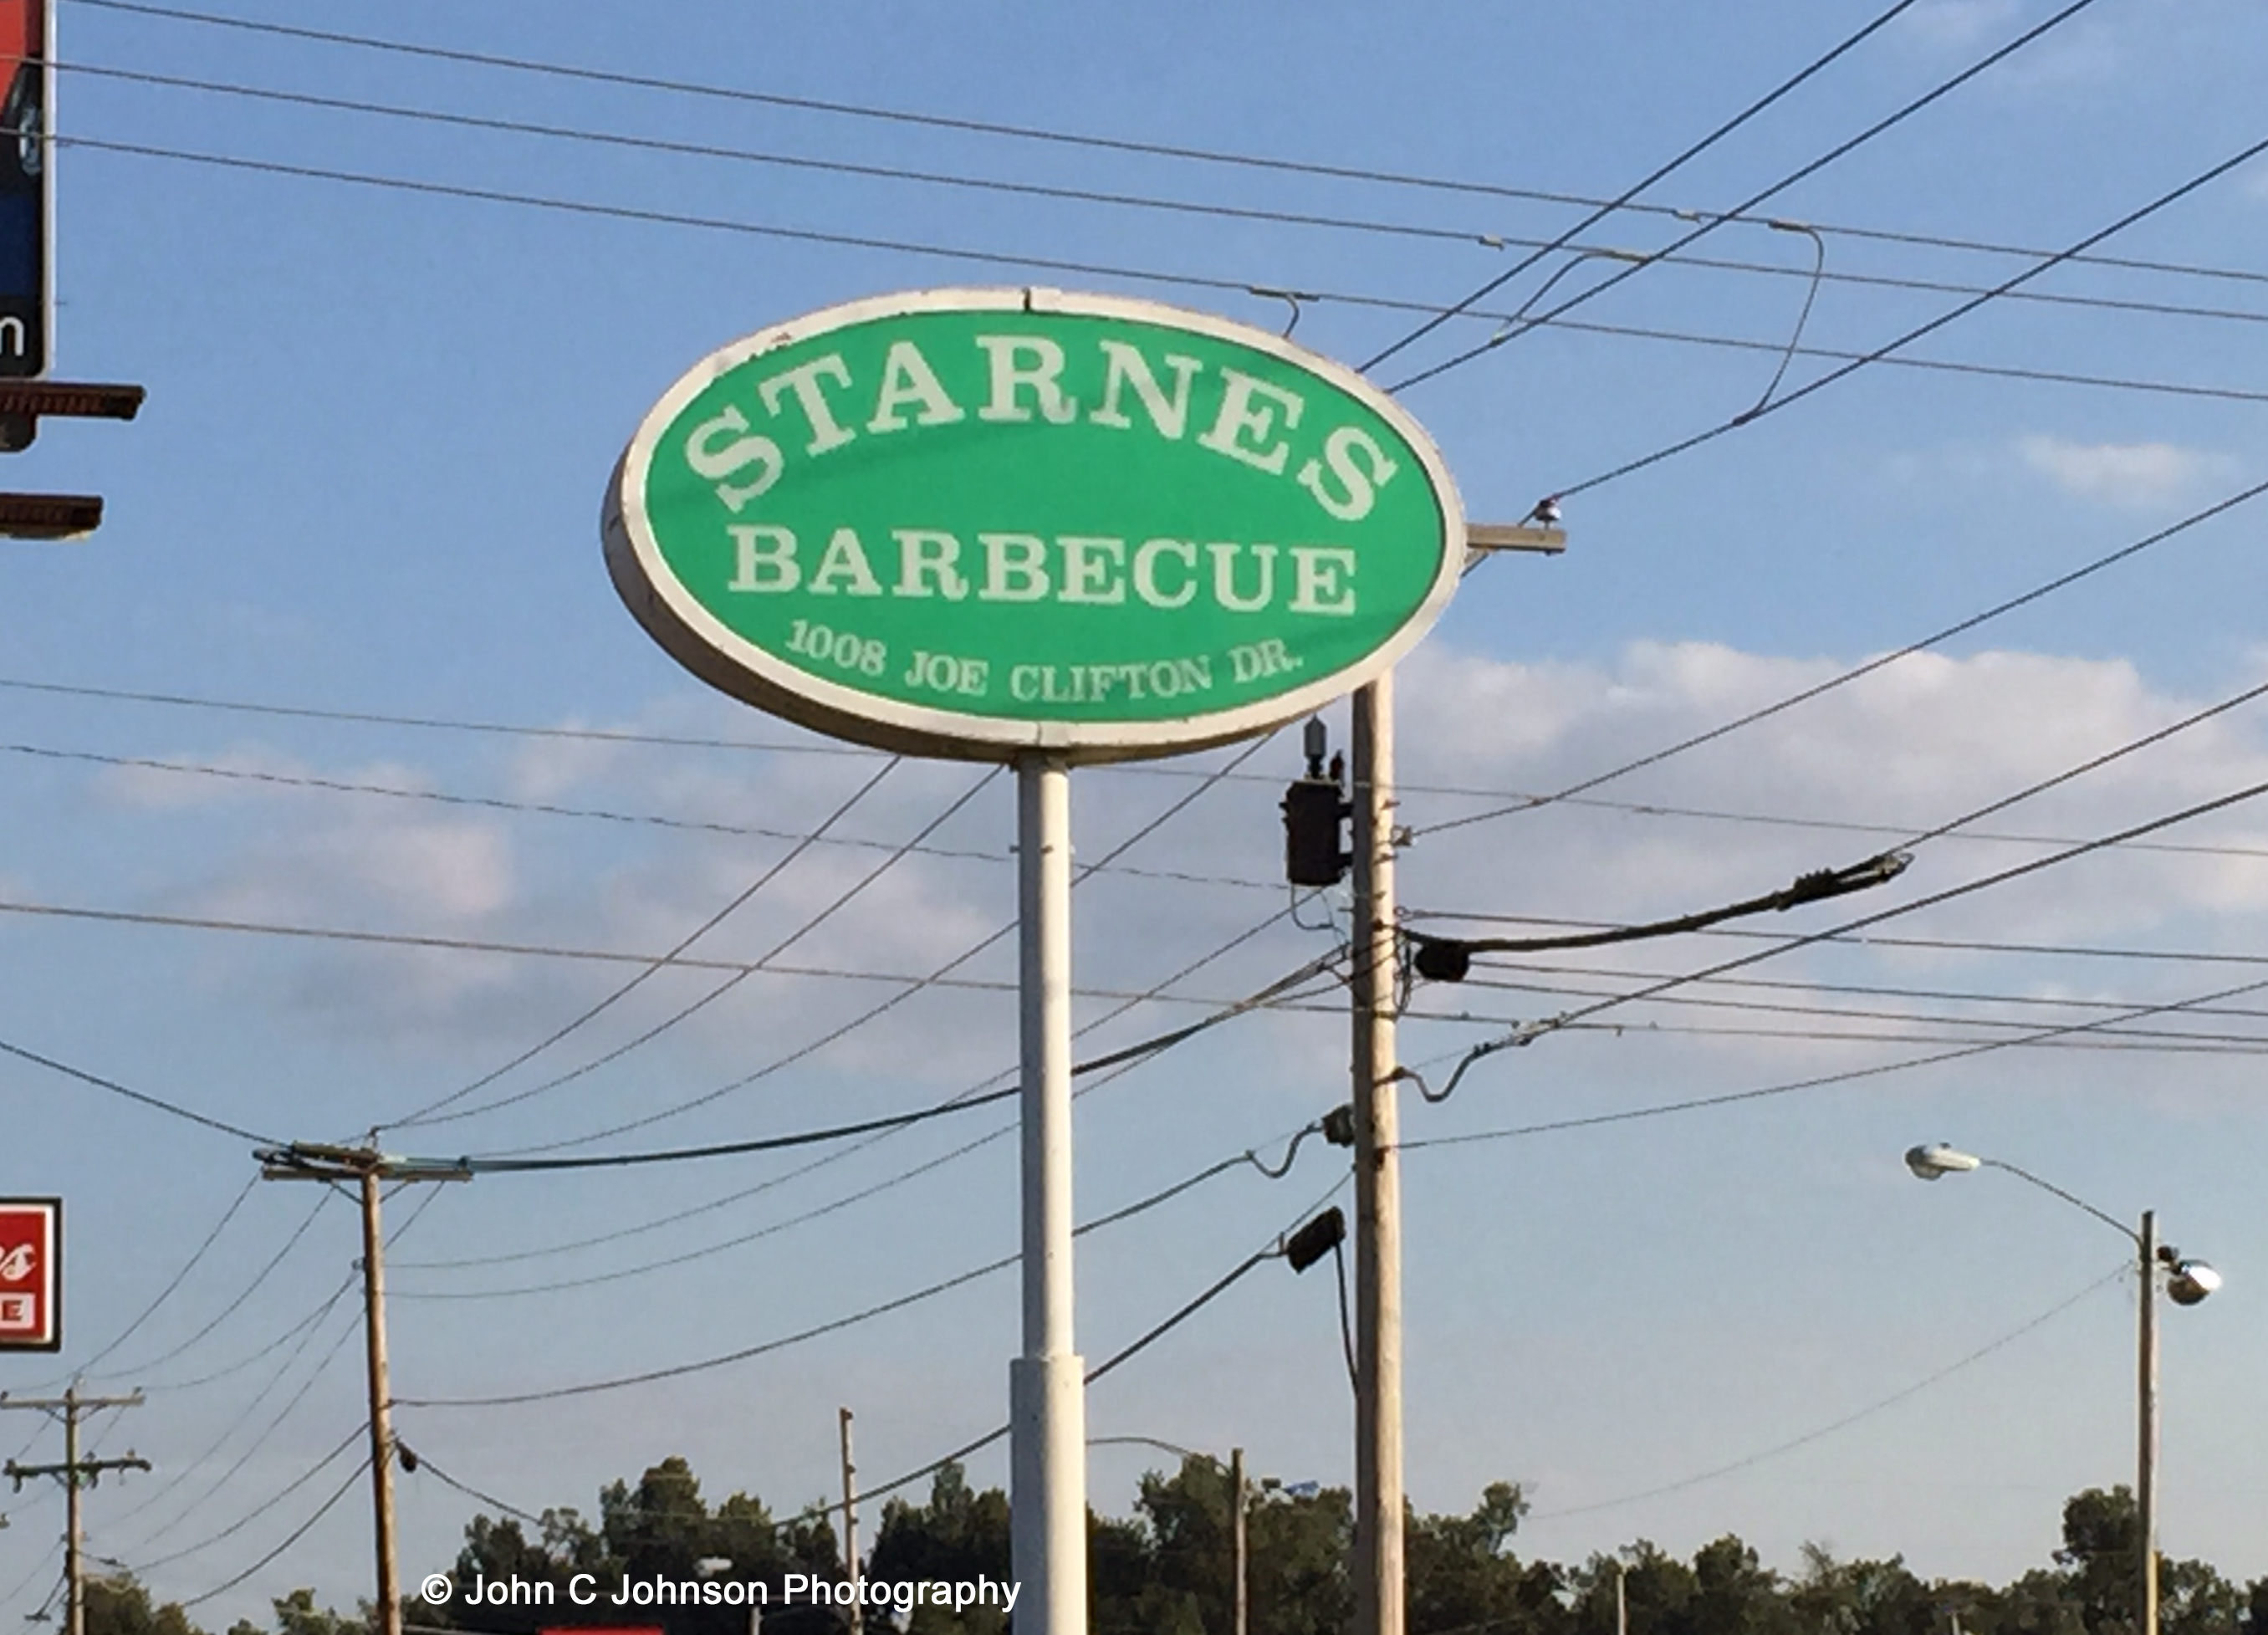 Starnes Barbecue Paducah, Kentucky